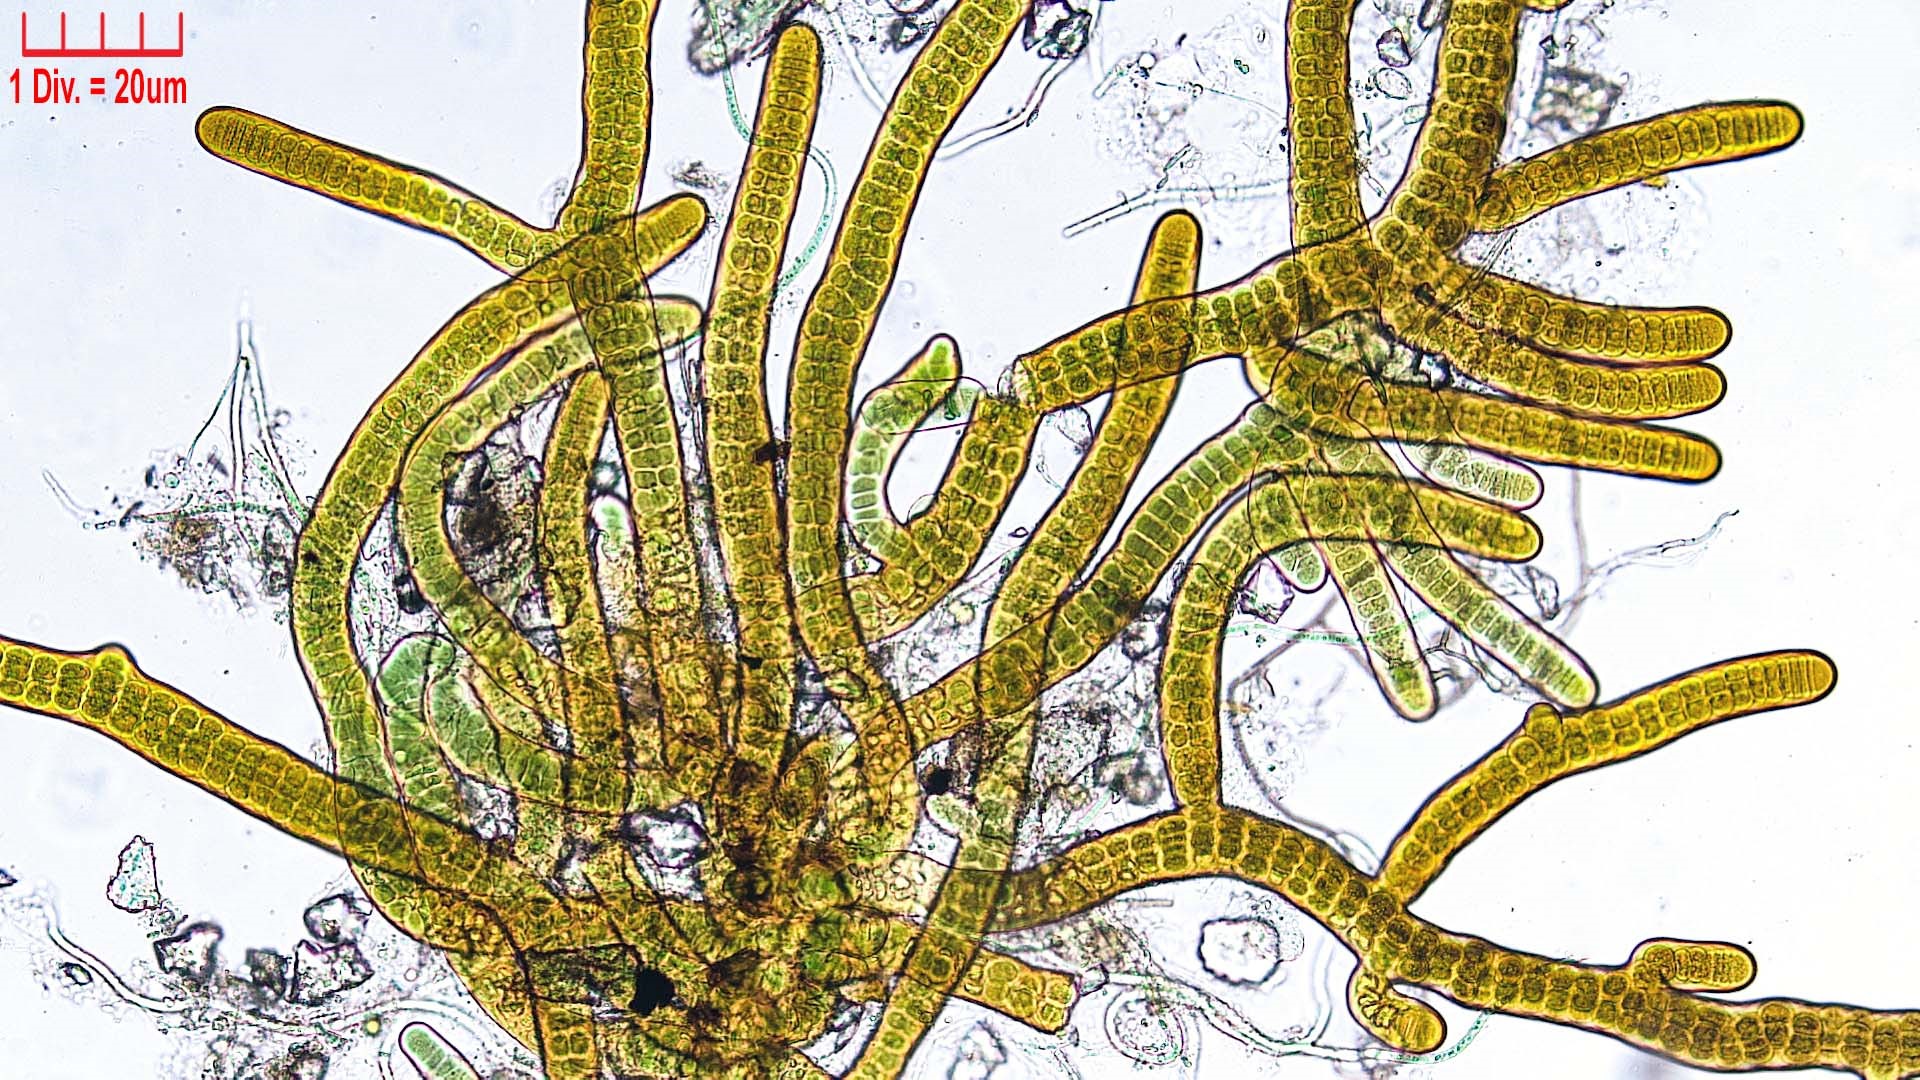 ././Cyanobacteria/Nostocales/Stigonemataceae/Stigonema/turfaceum/stigonema-turfaceum-522.jpg